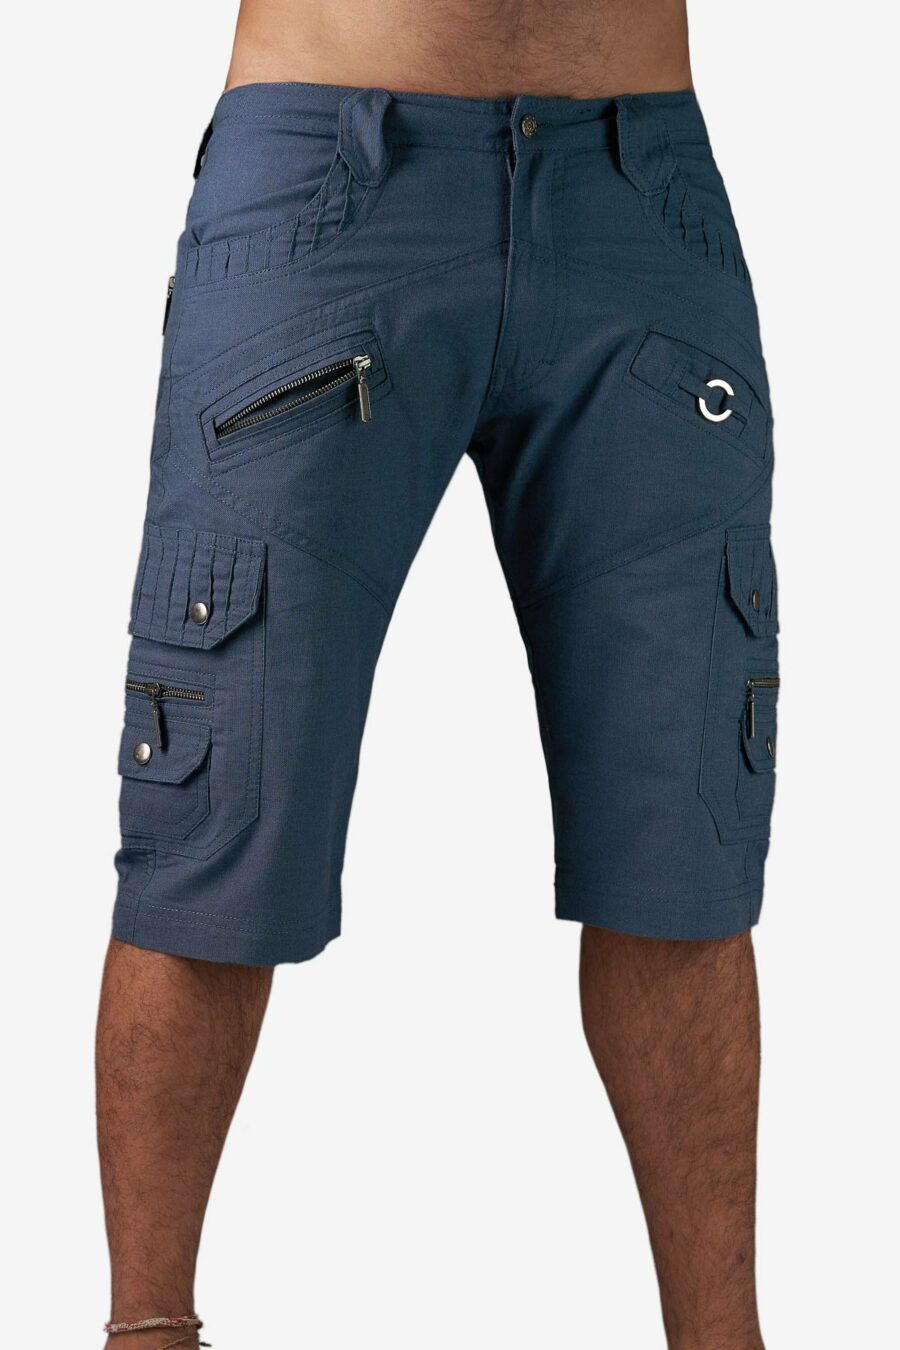 short-inizio-pants-blue-for-men-alternative-streetwear-and-festival-fashion-avanyah-clothing